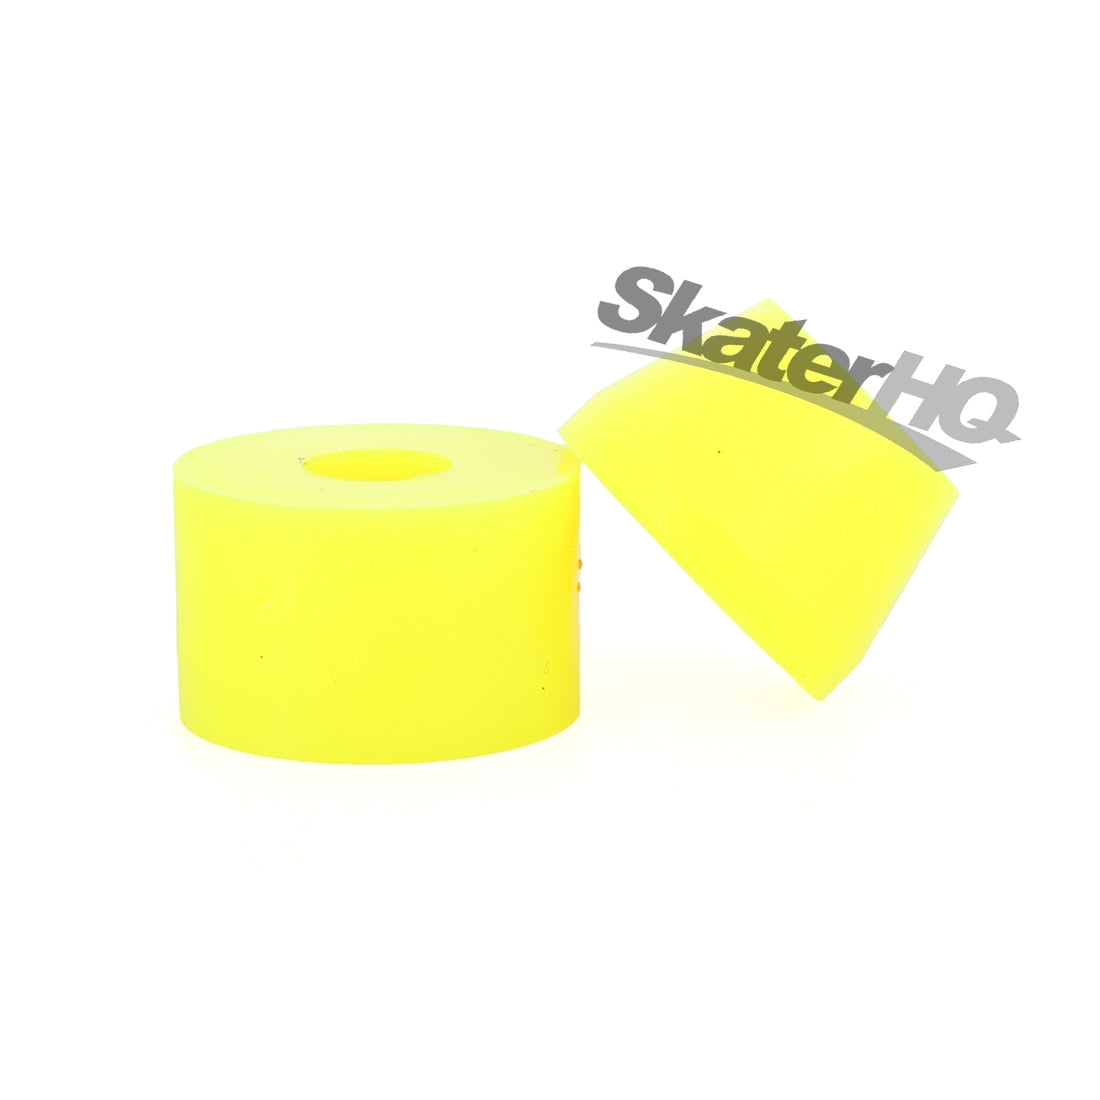 Venom Bushings Standard HPF 85A - Neon Yellow Skateboard Hardware and Parts